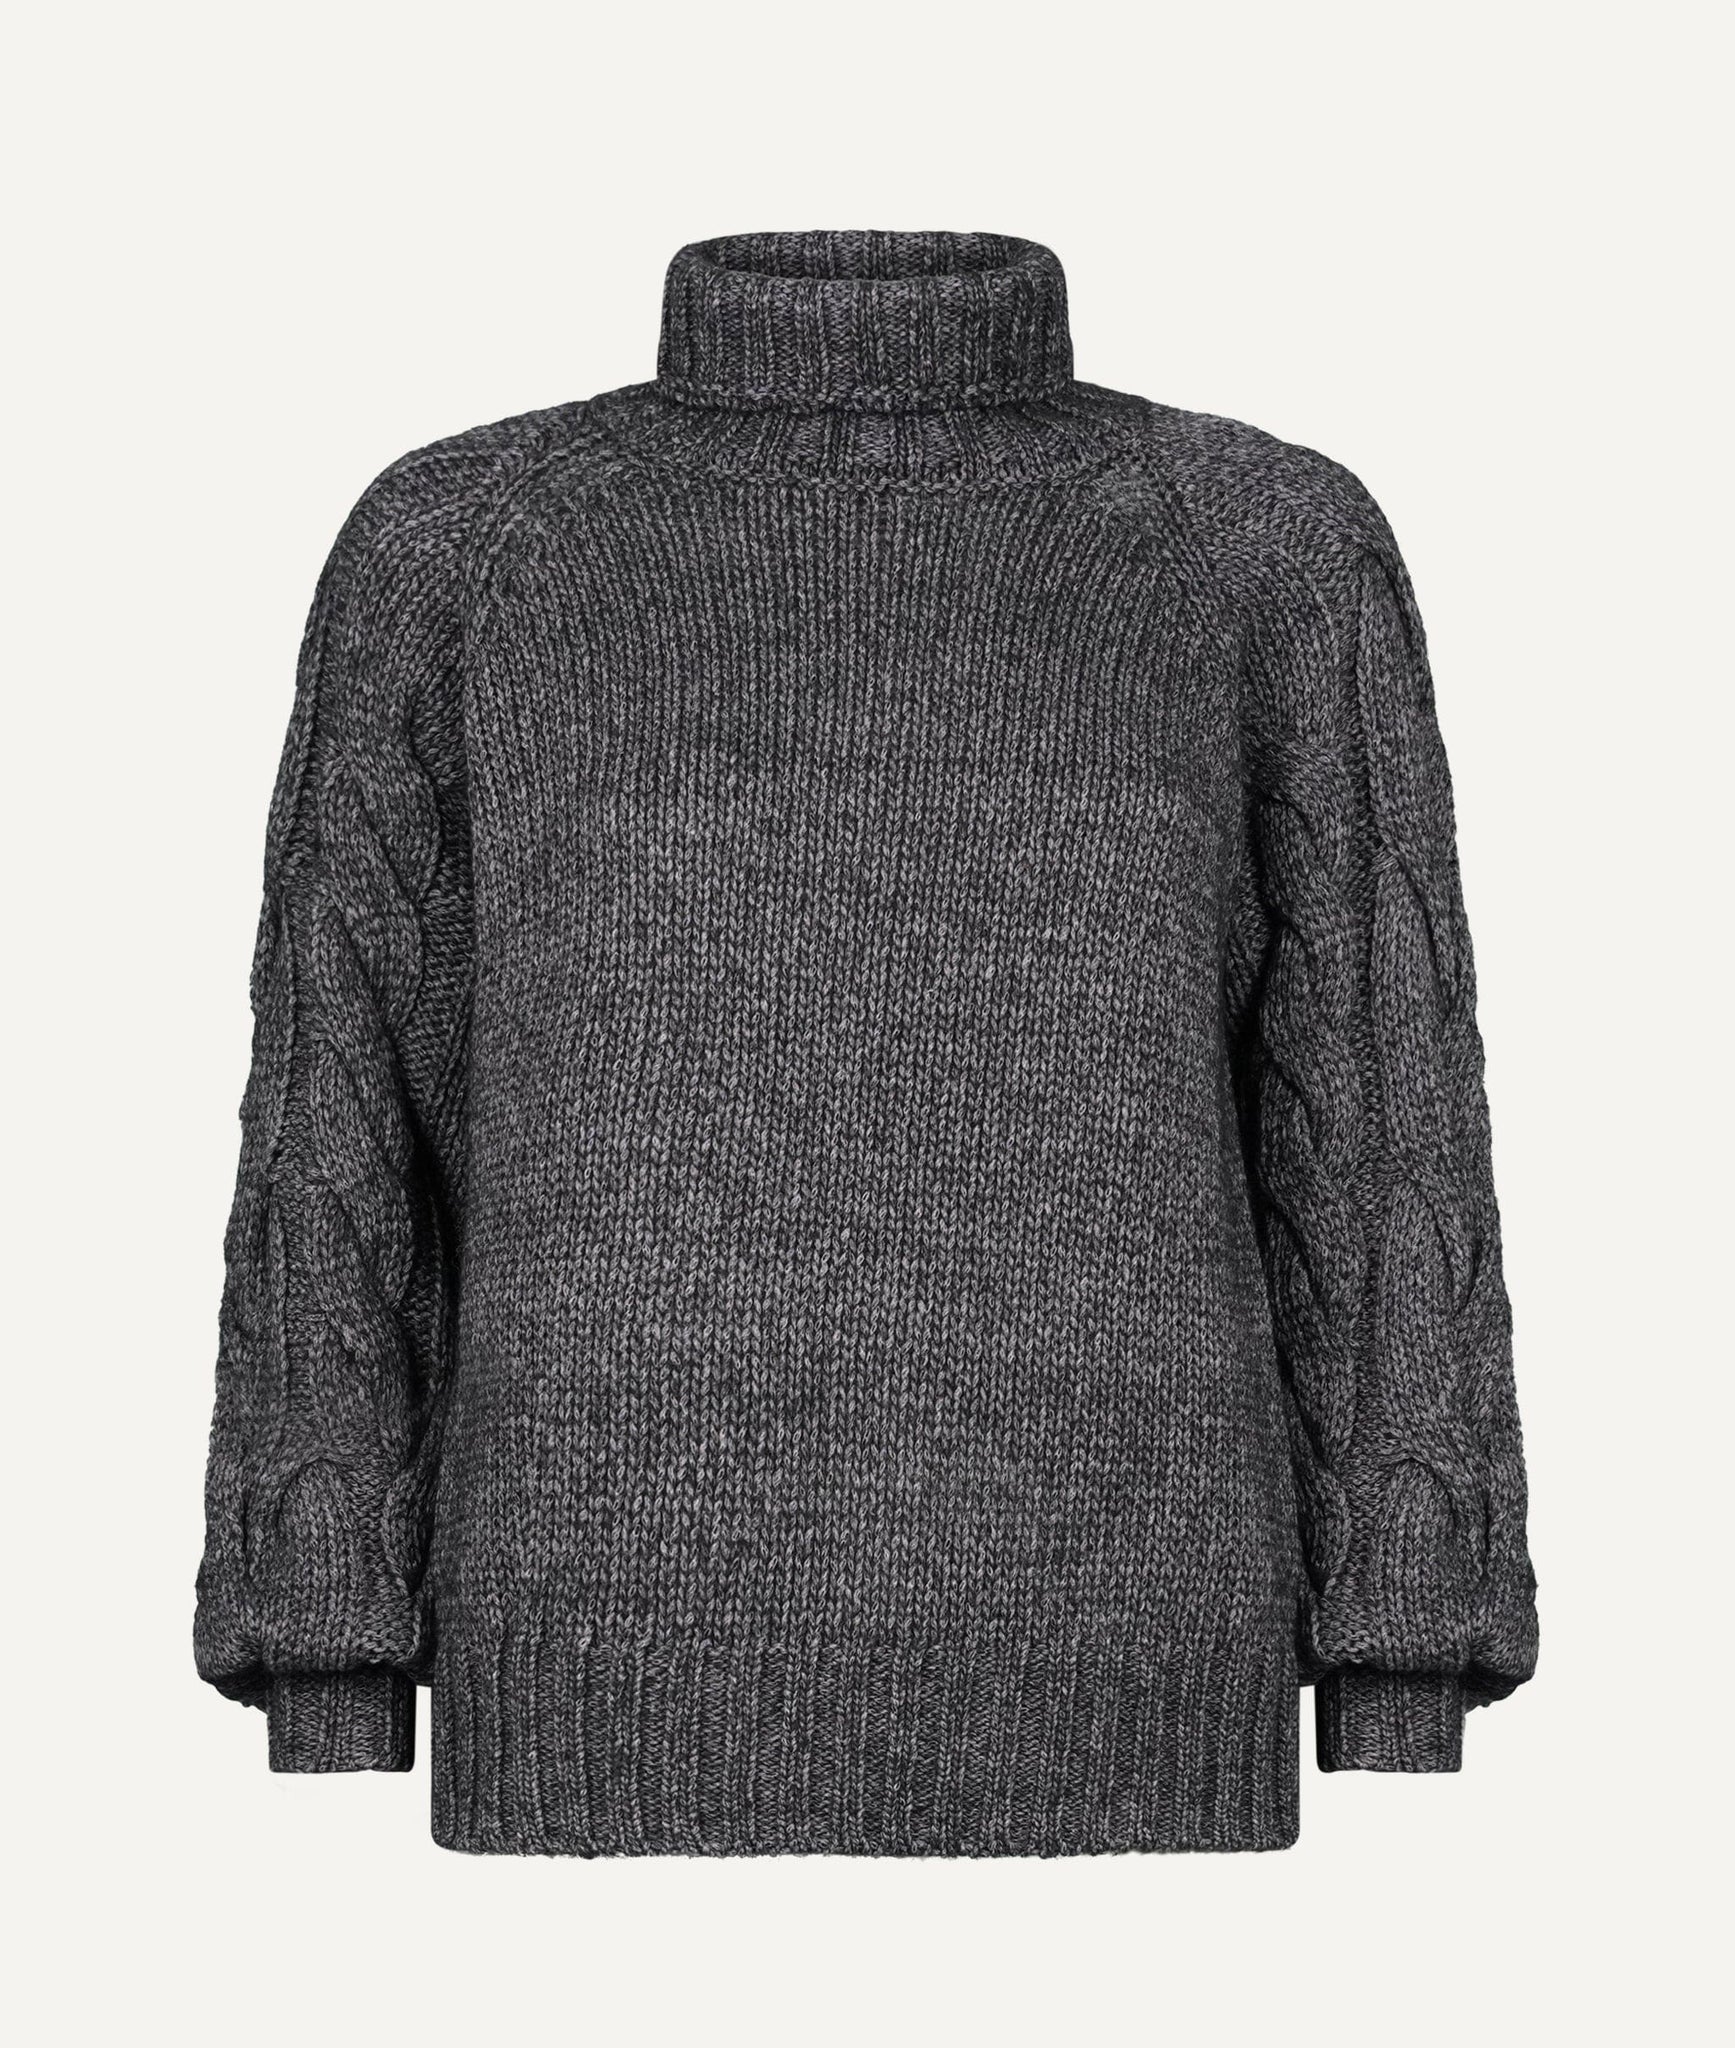 Eleventy - Sweater in Alpaca & Cotton